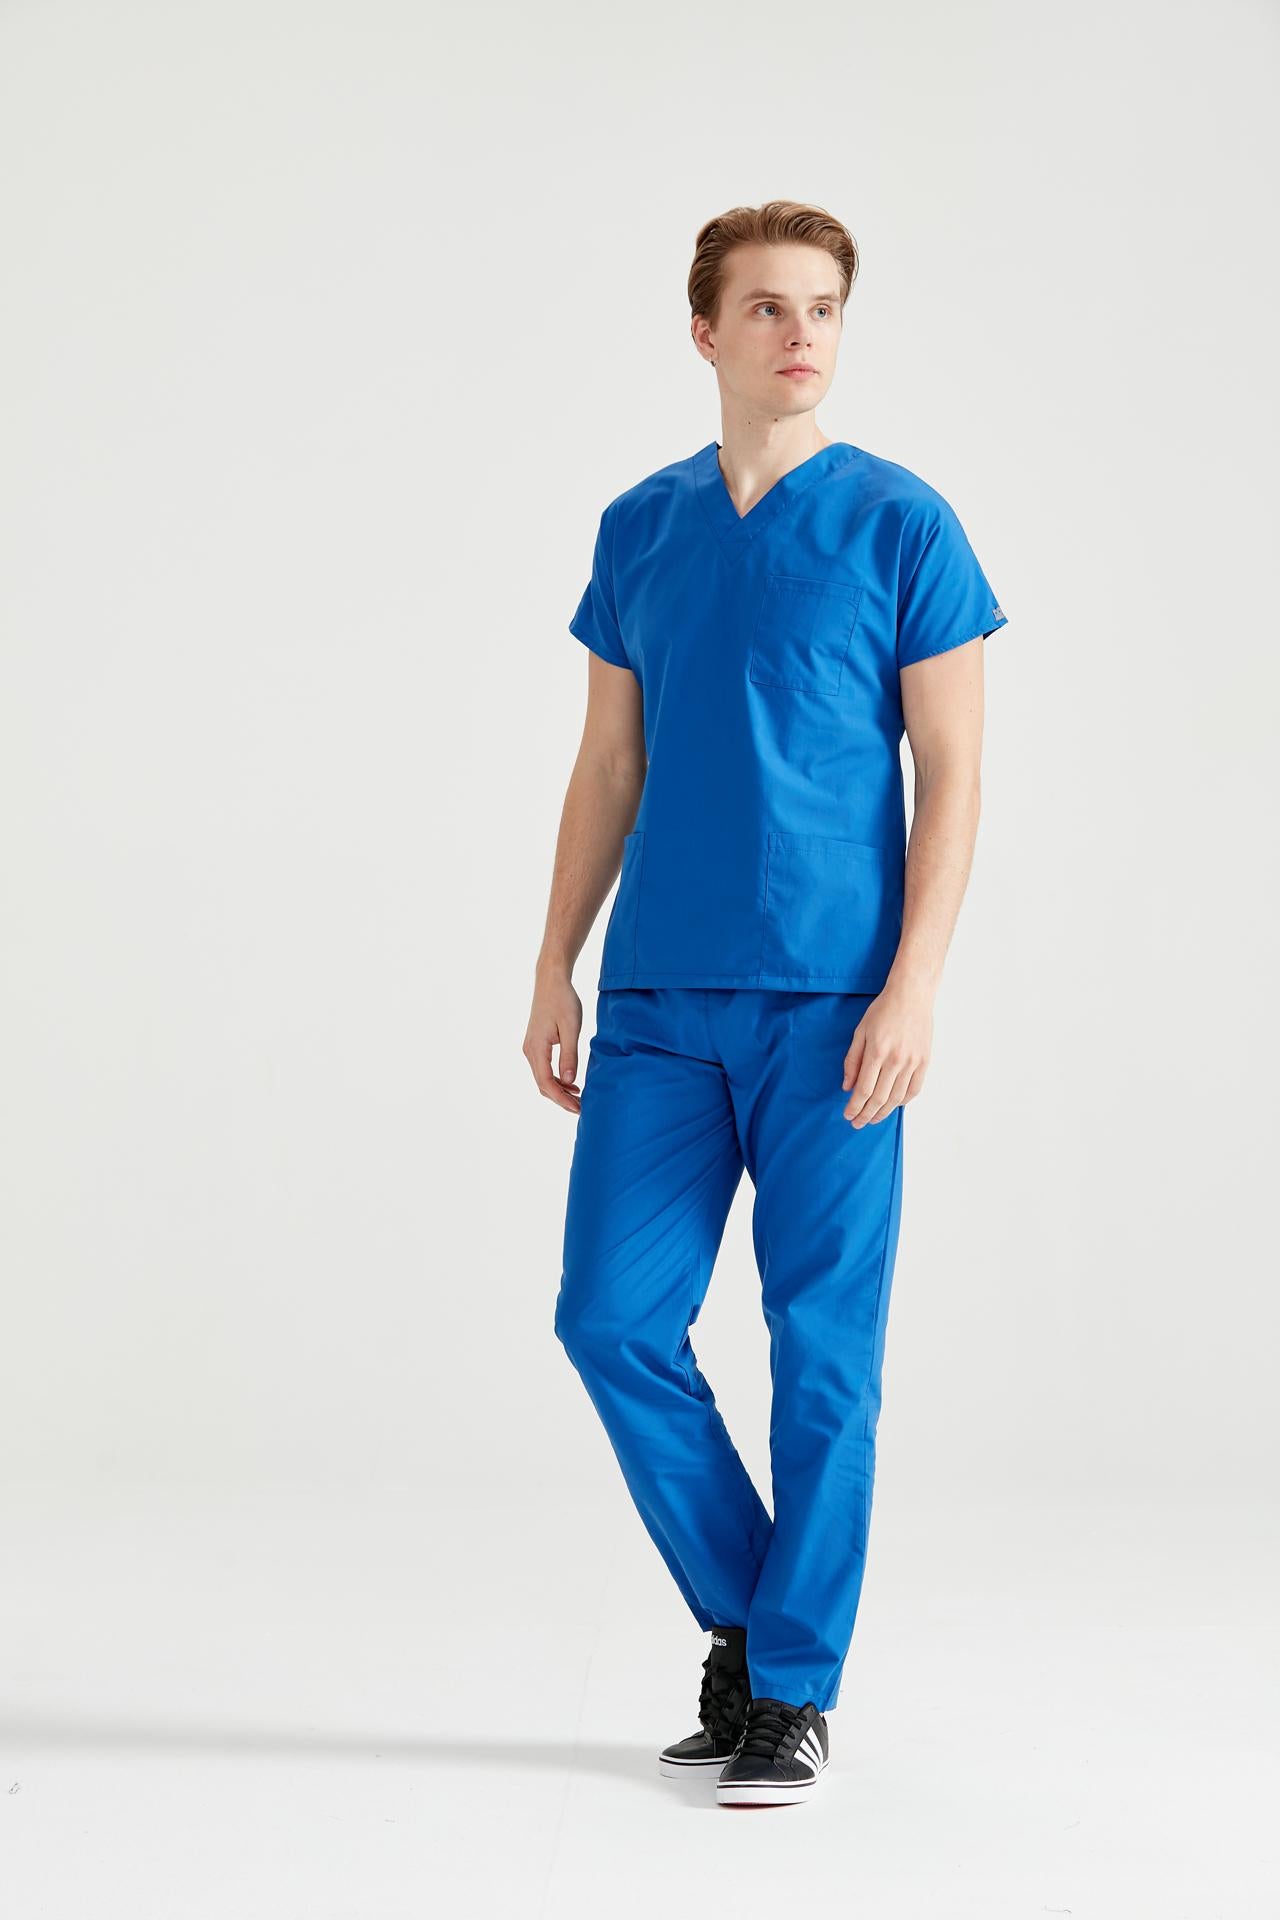 Asistent medical imbracat in costum medical barbati, elastan, albastru regal, vedere din profil